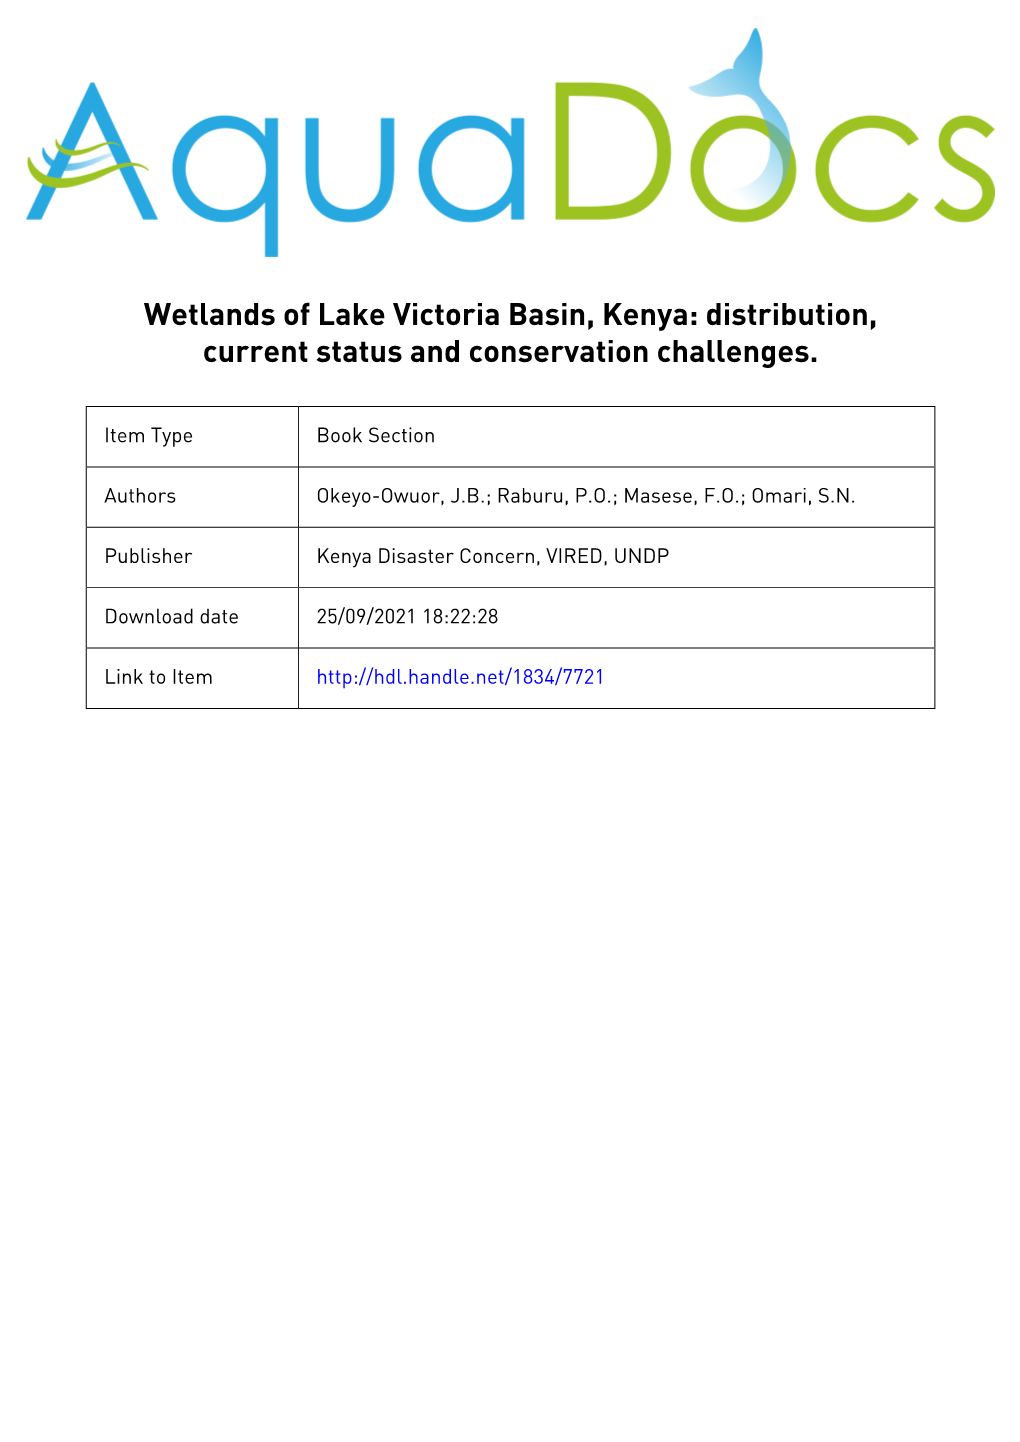 Wetlands of Lake Victoria Basin, Kenya: Distribution, Current Status and Conservation Challenges